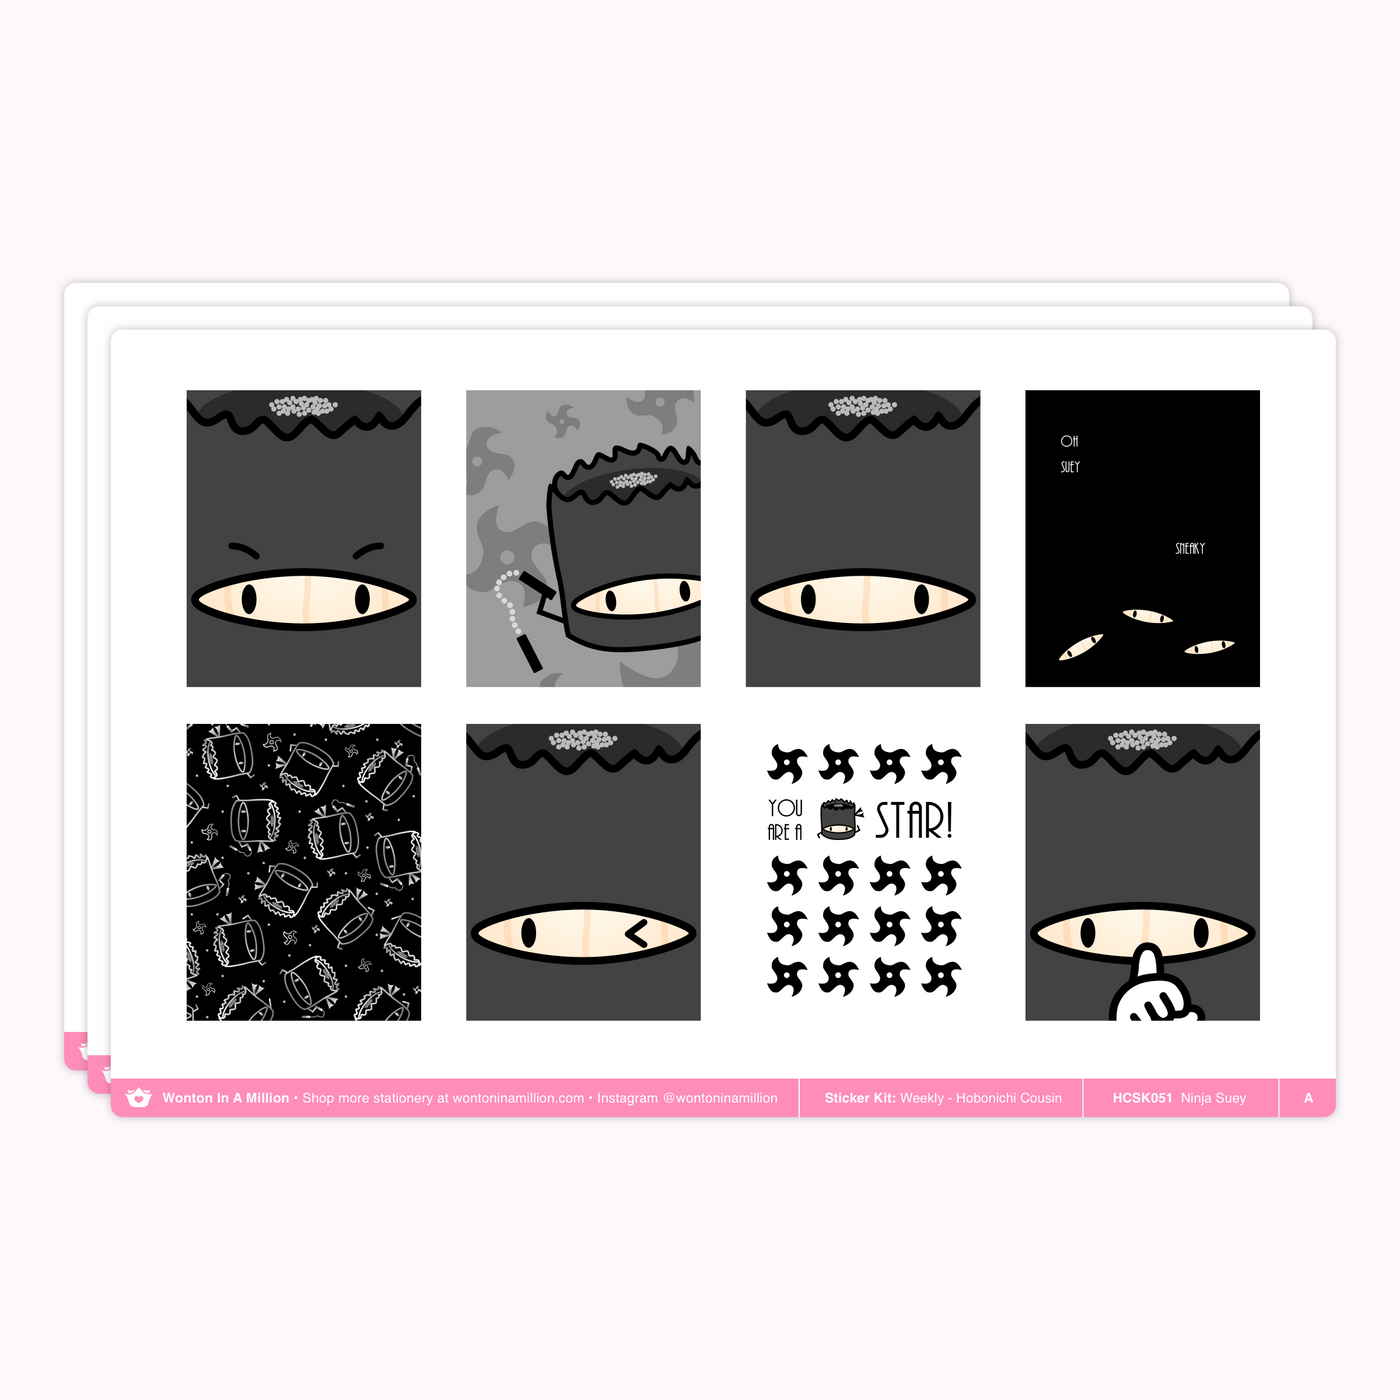 HCSK051 | Ninja Weekly Sticker Kit (Hobonichi Cousin)